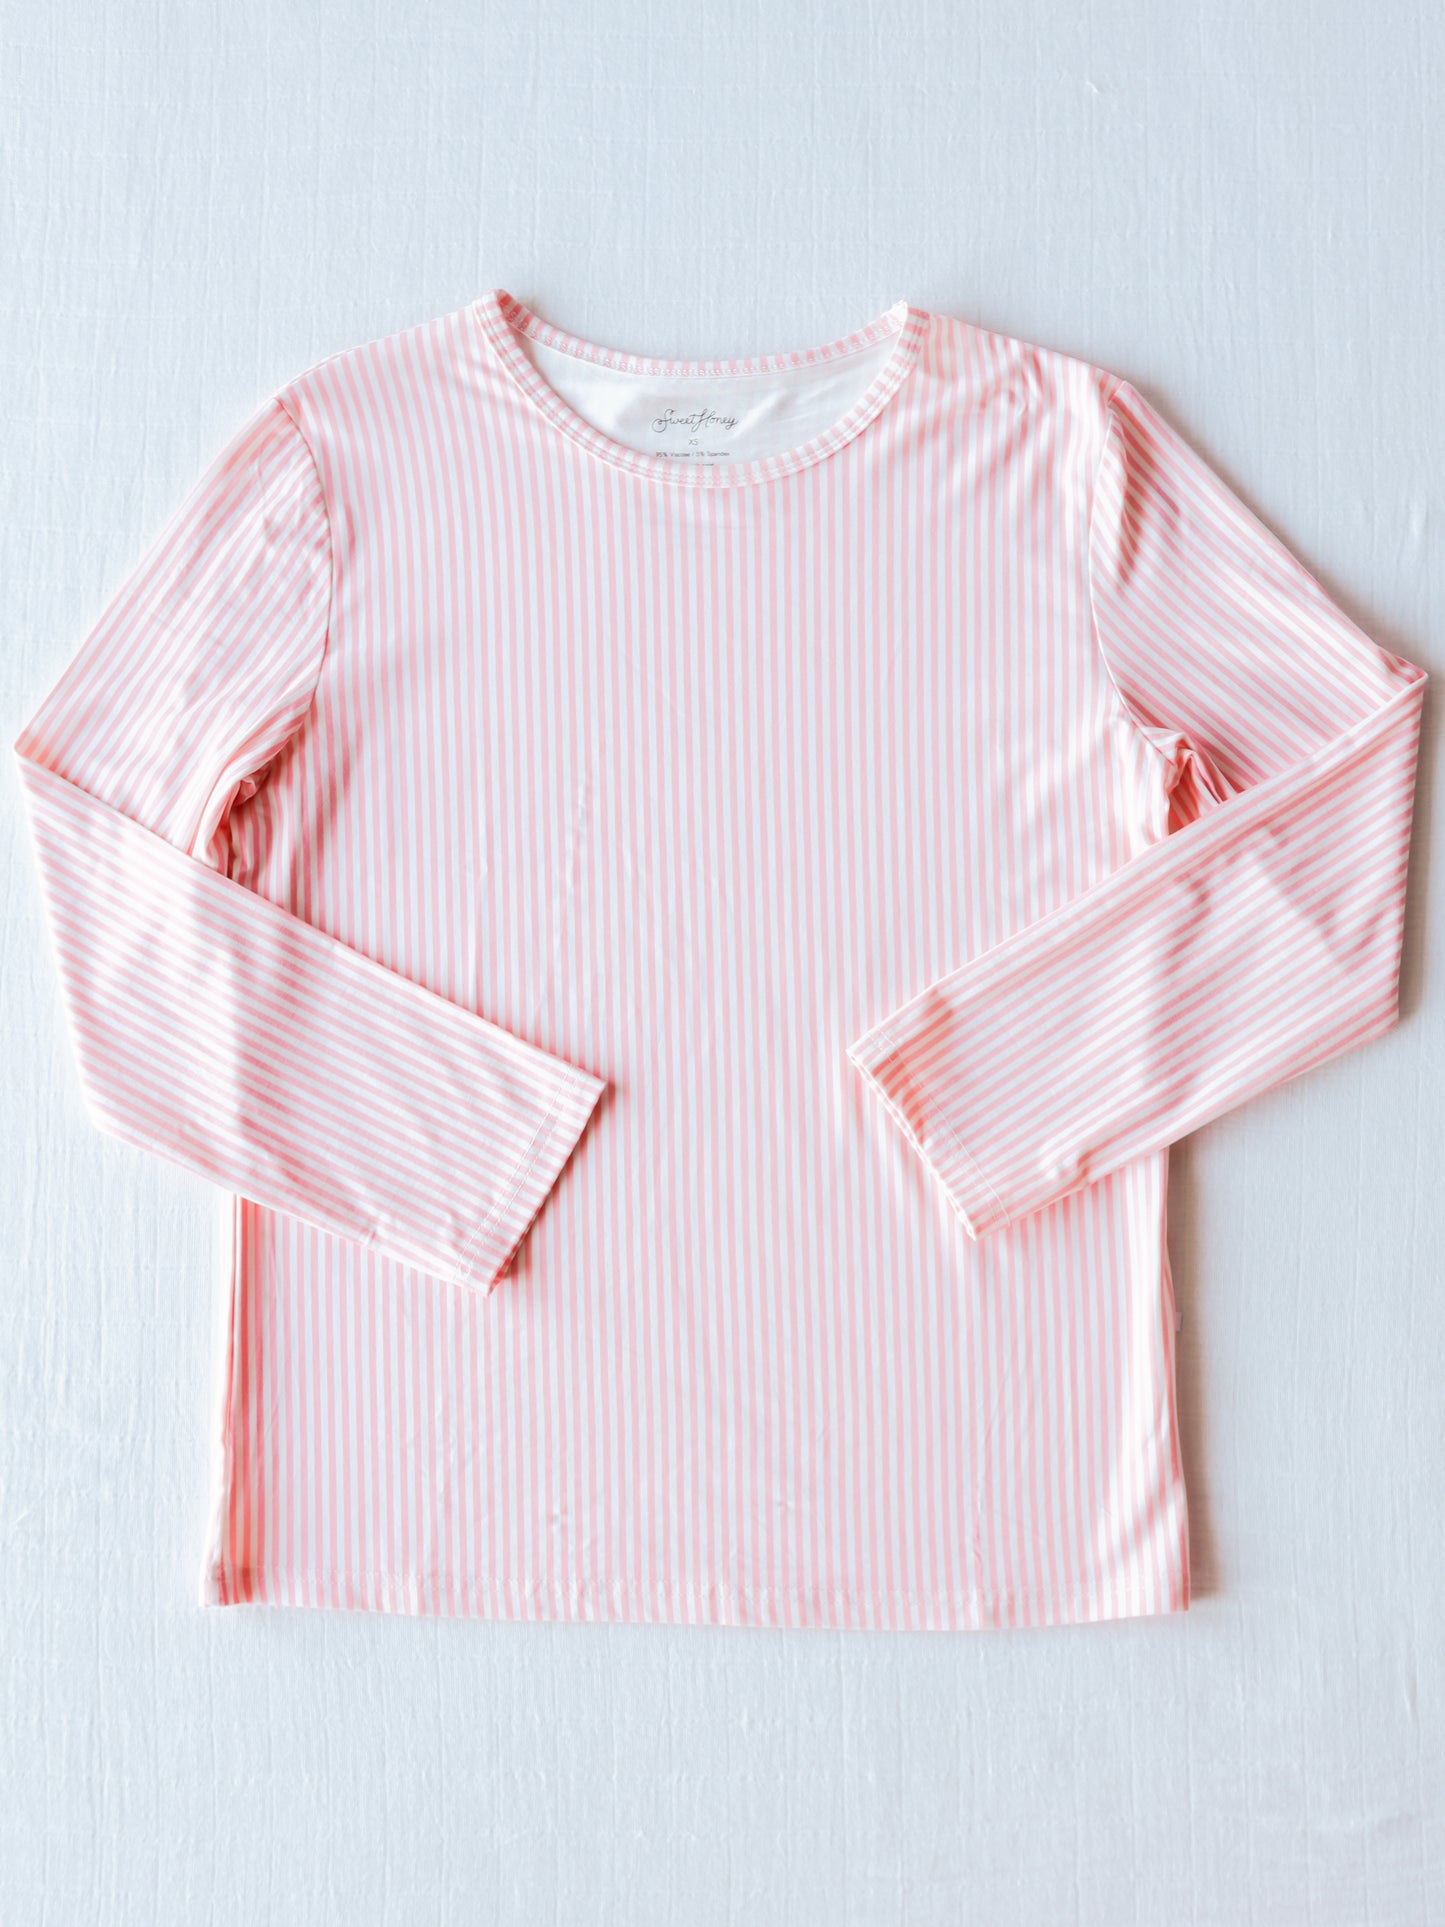 Women's Cloud Pajamas - Pink Stripes